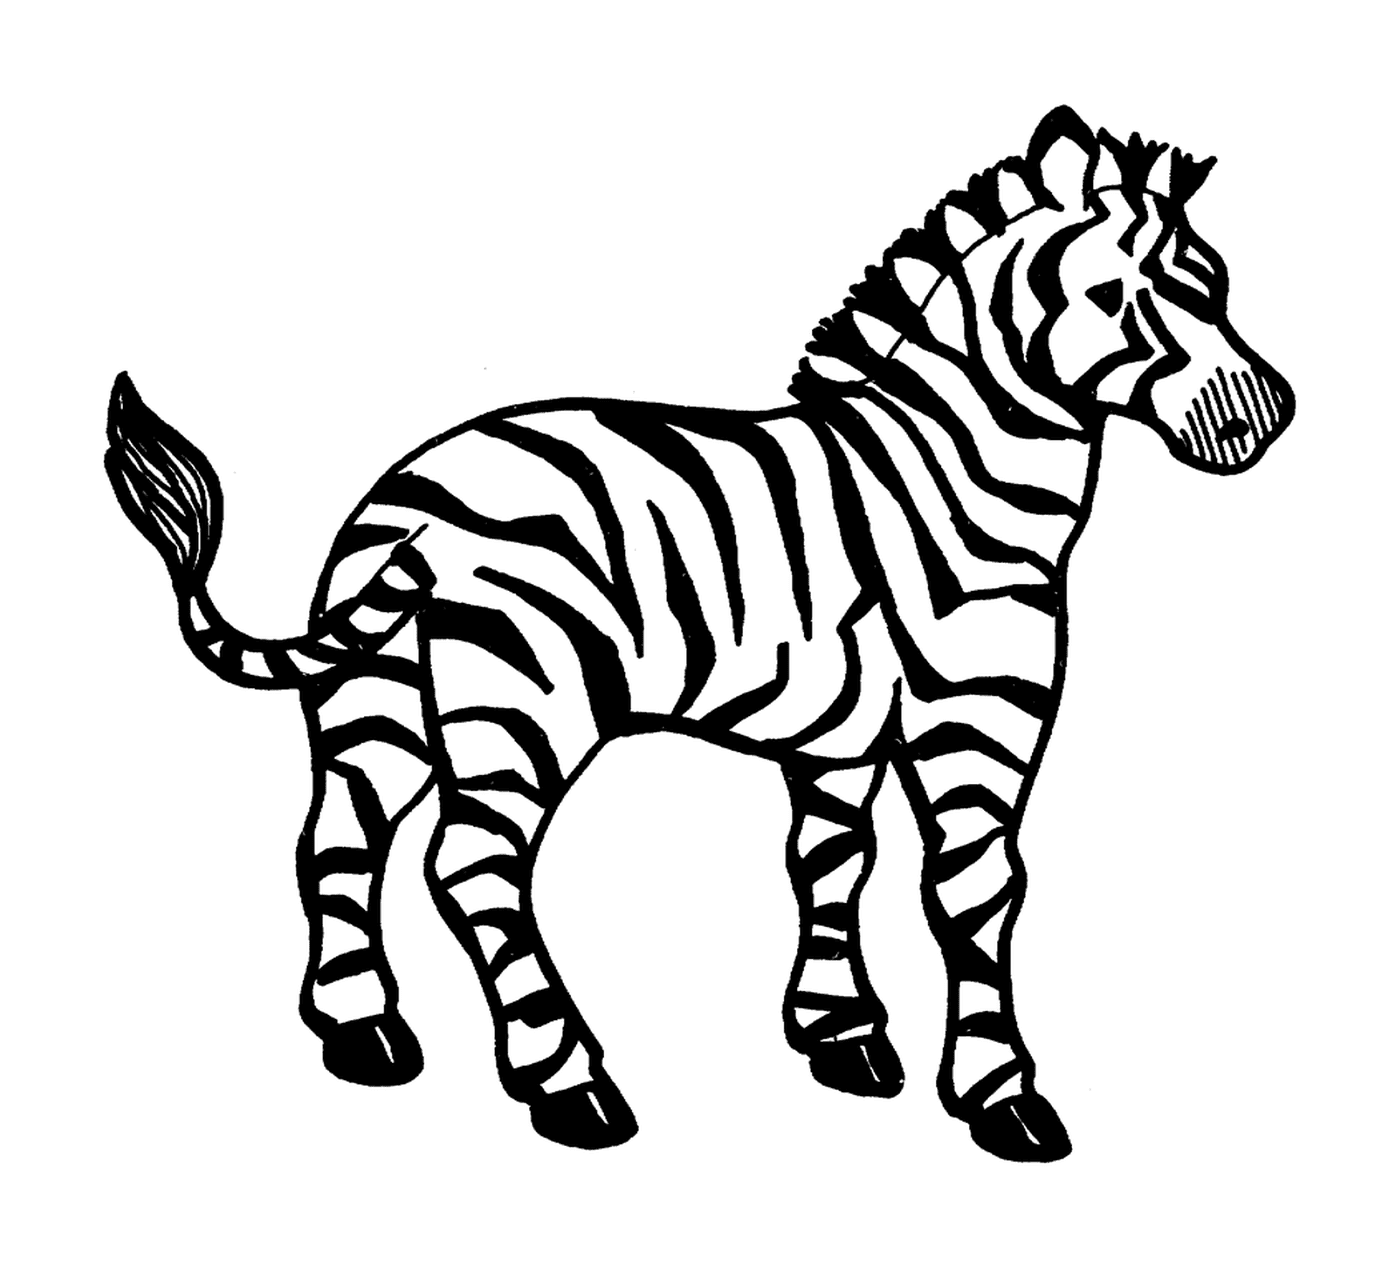  Plan 1: Zebra in action 